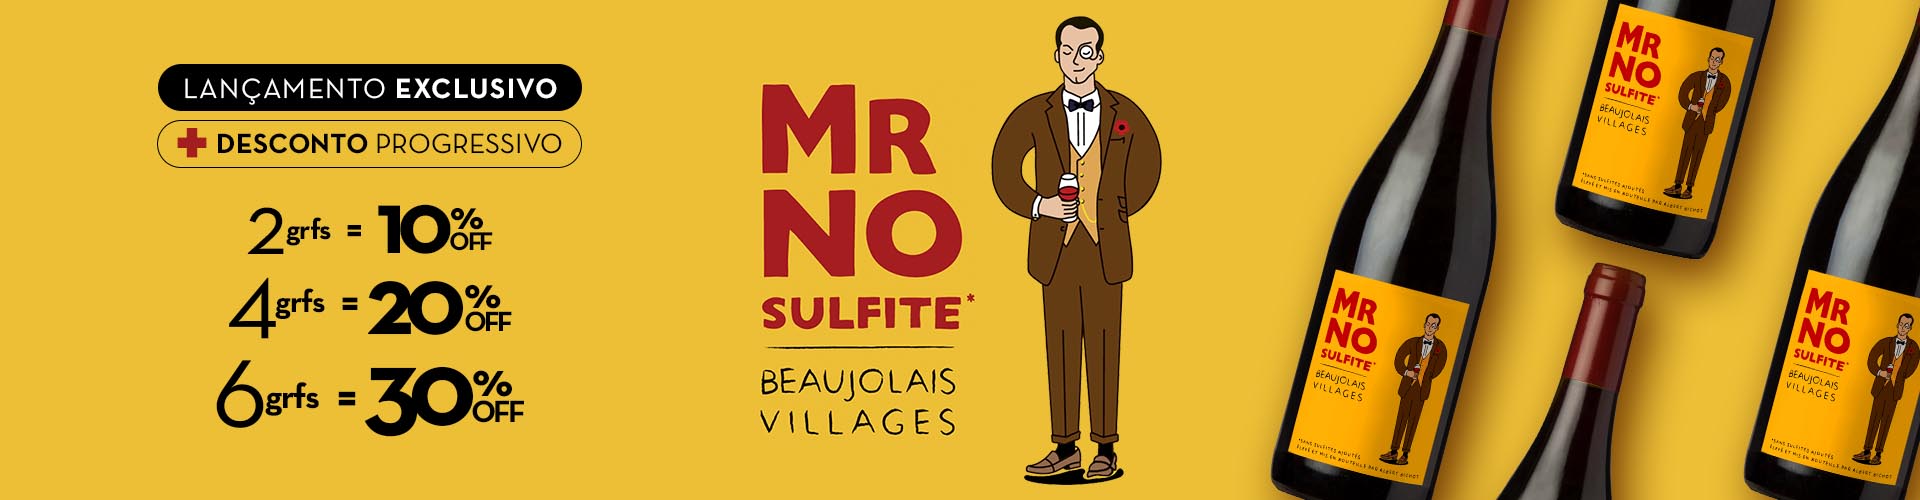 Albert Bichot Mr No Sulfite Beaujolais Villages 2019